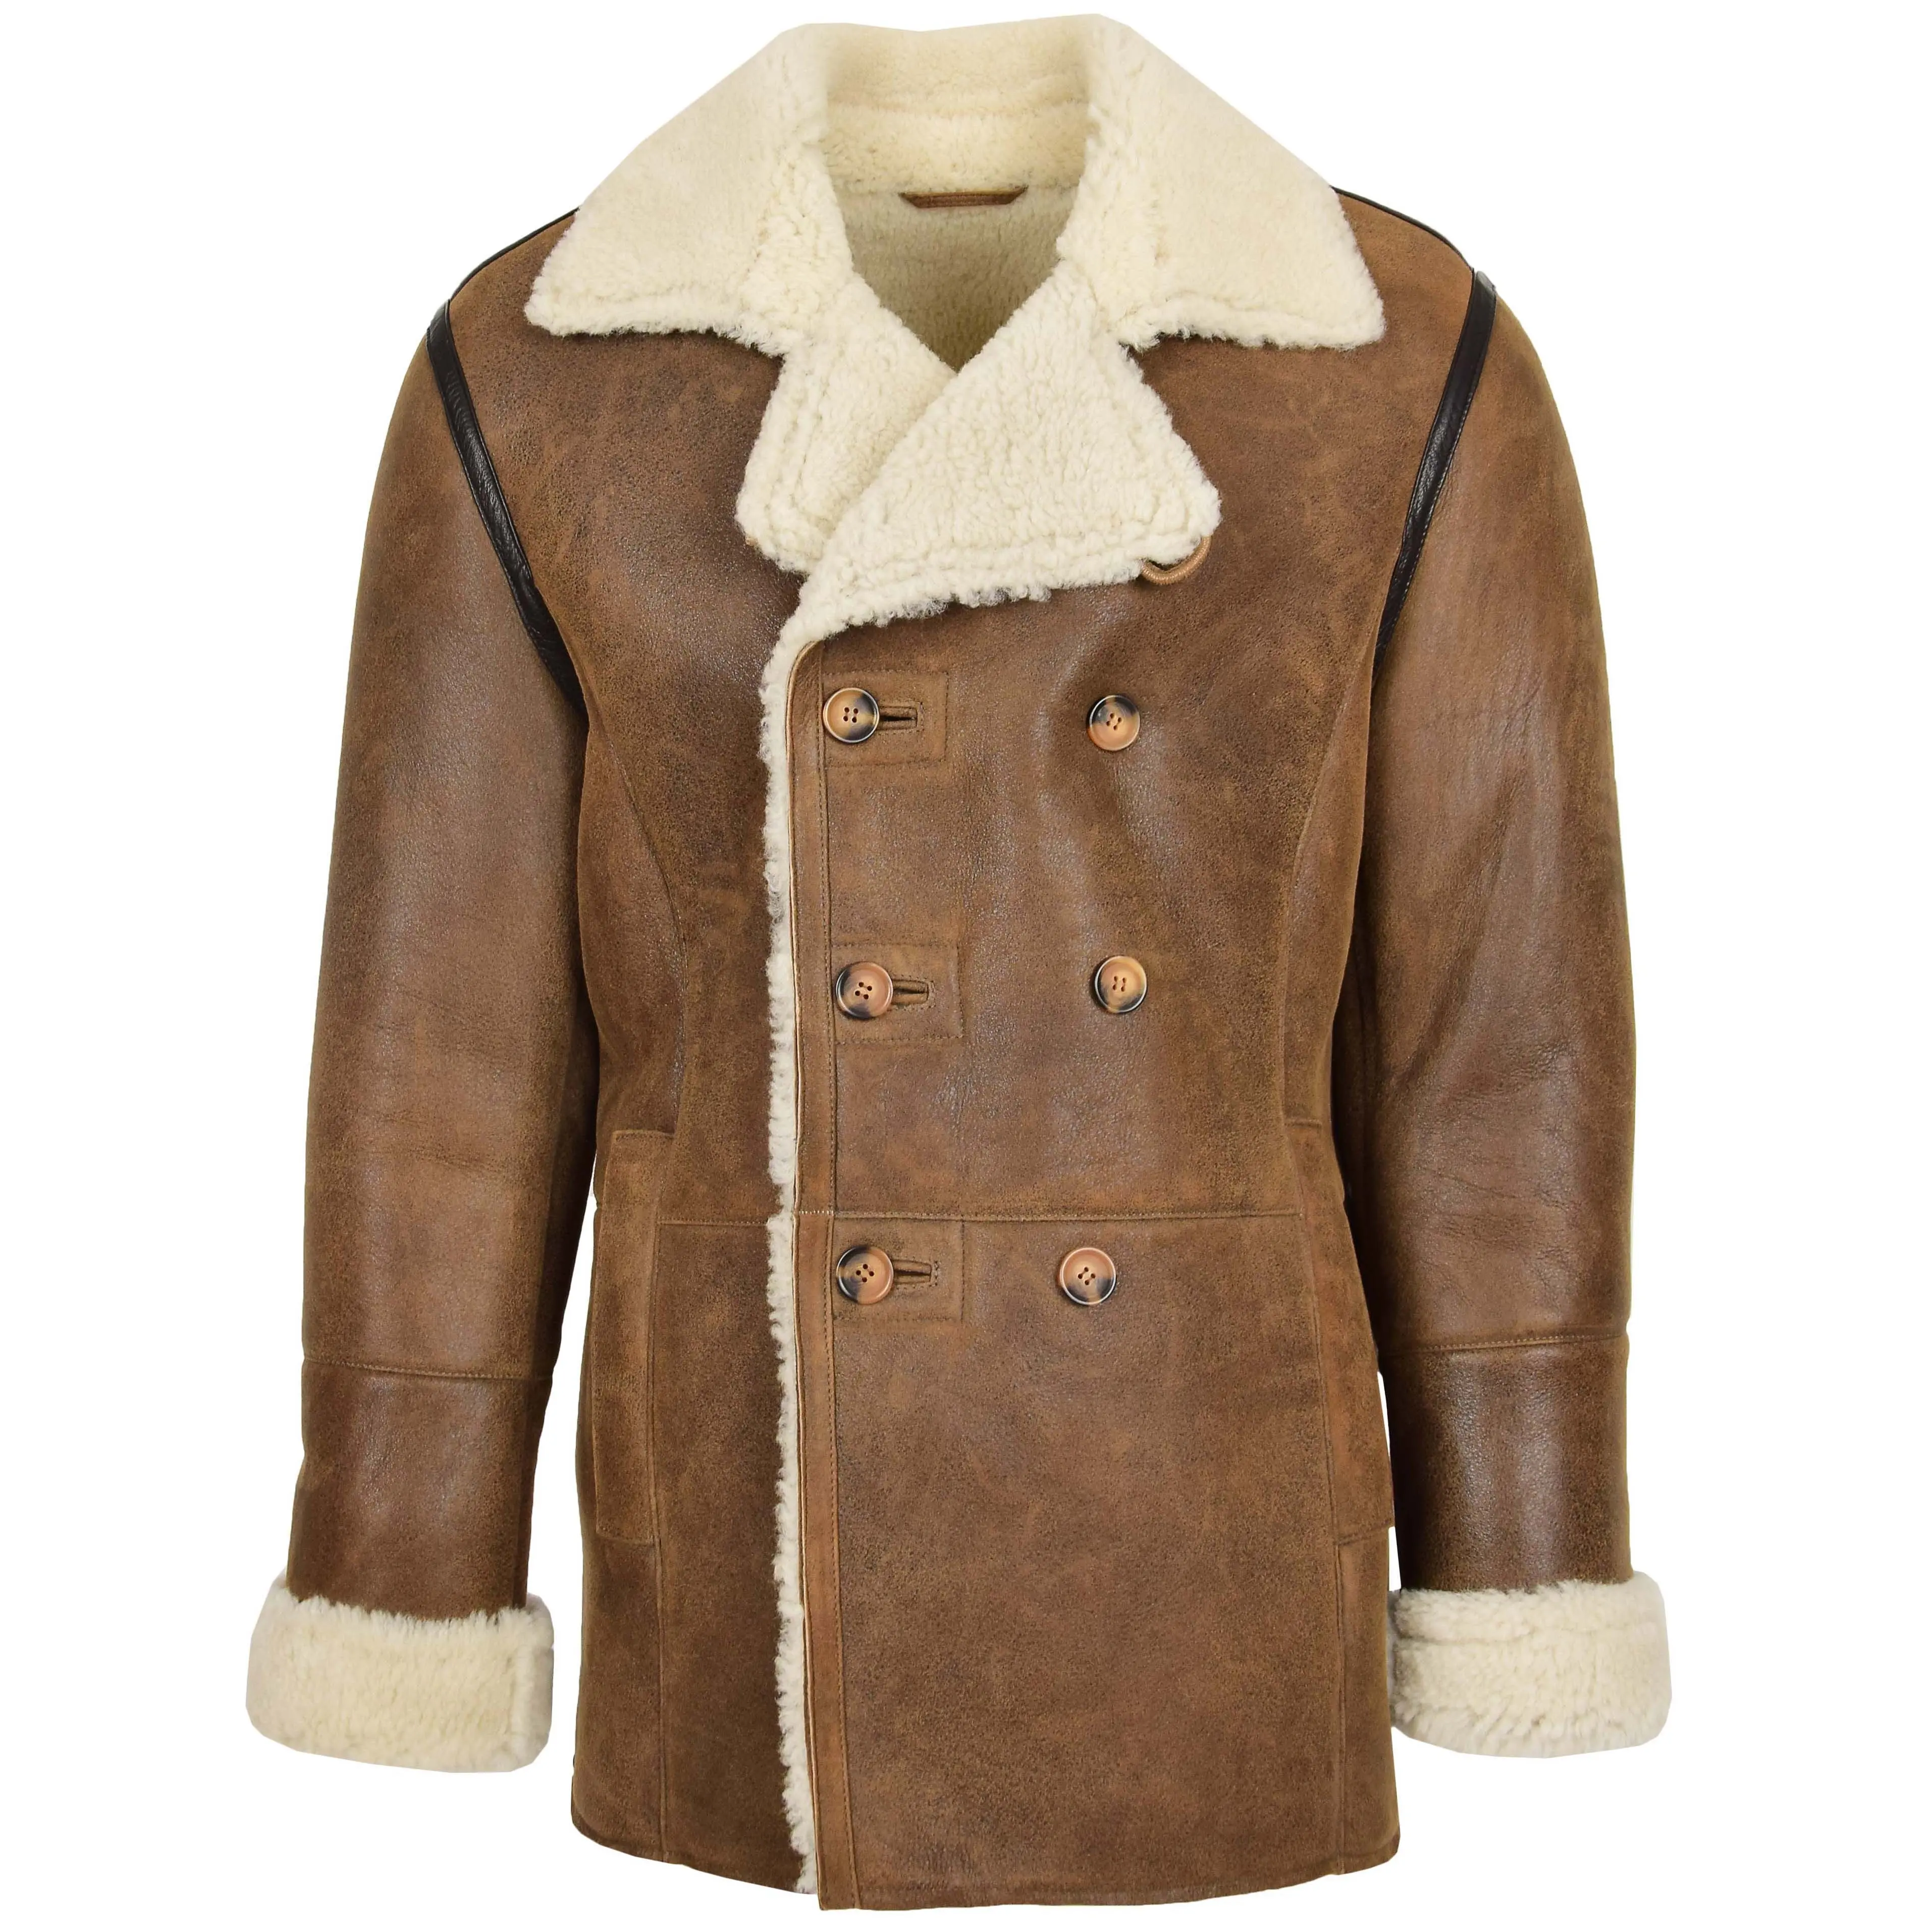 Men's Sheepskin Leather Trench Coat Shearling Vintage Style Winter Warm Wool white Faux Fur Long Coat